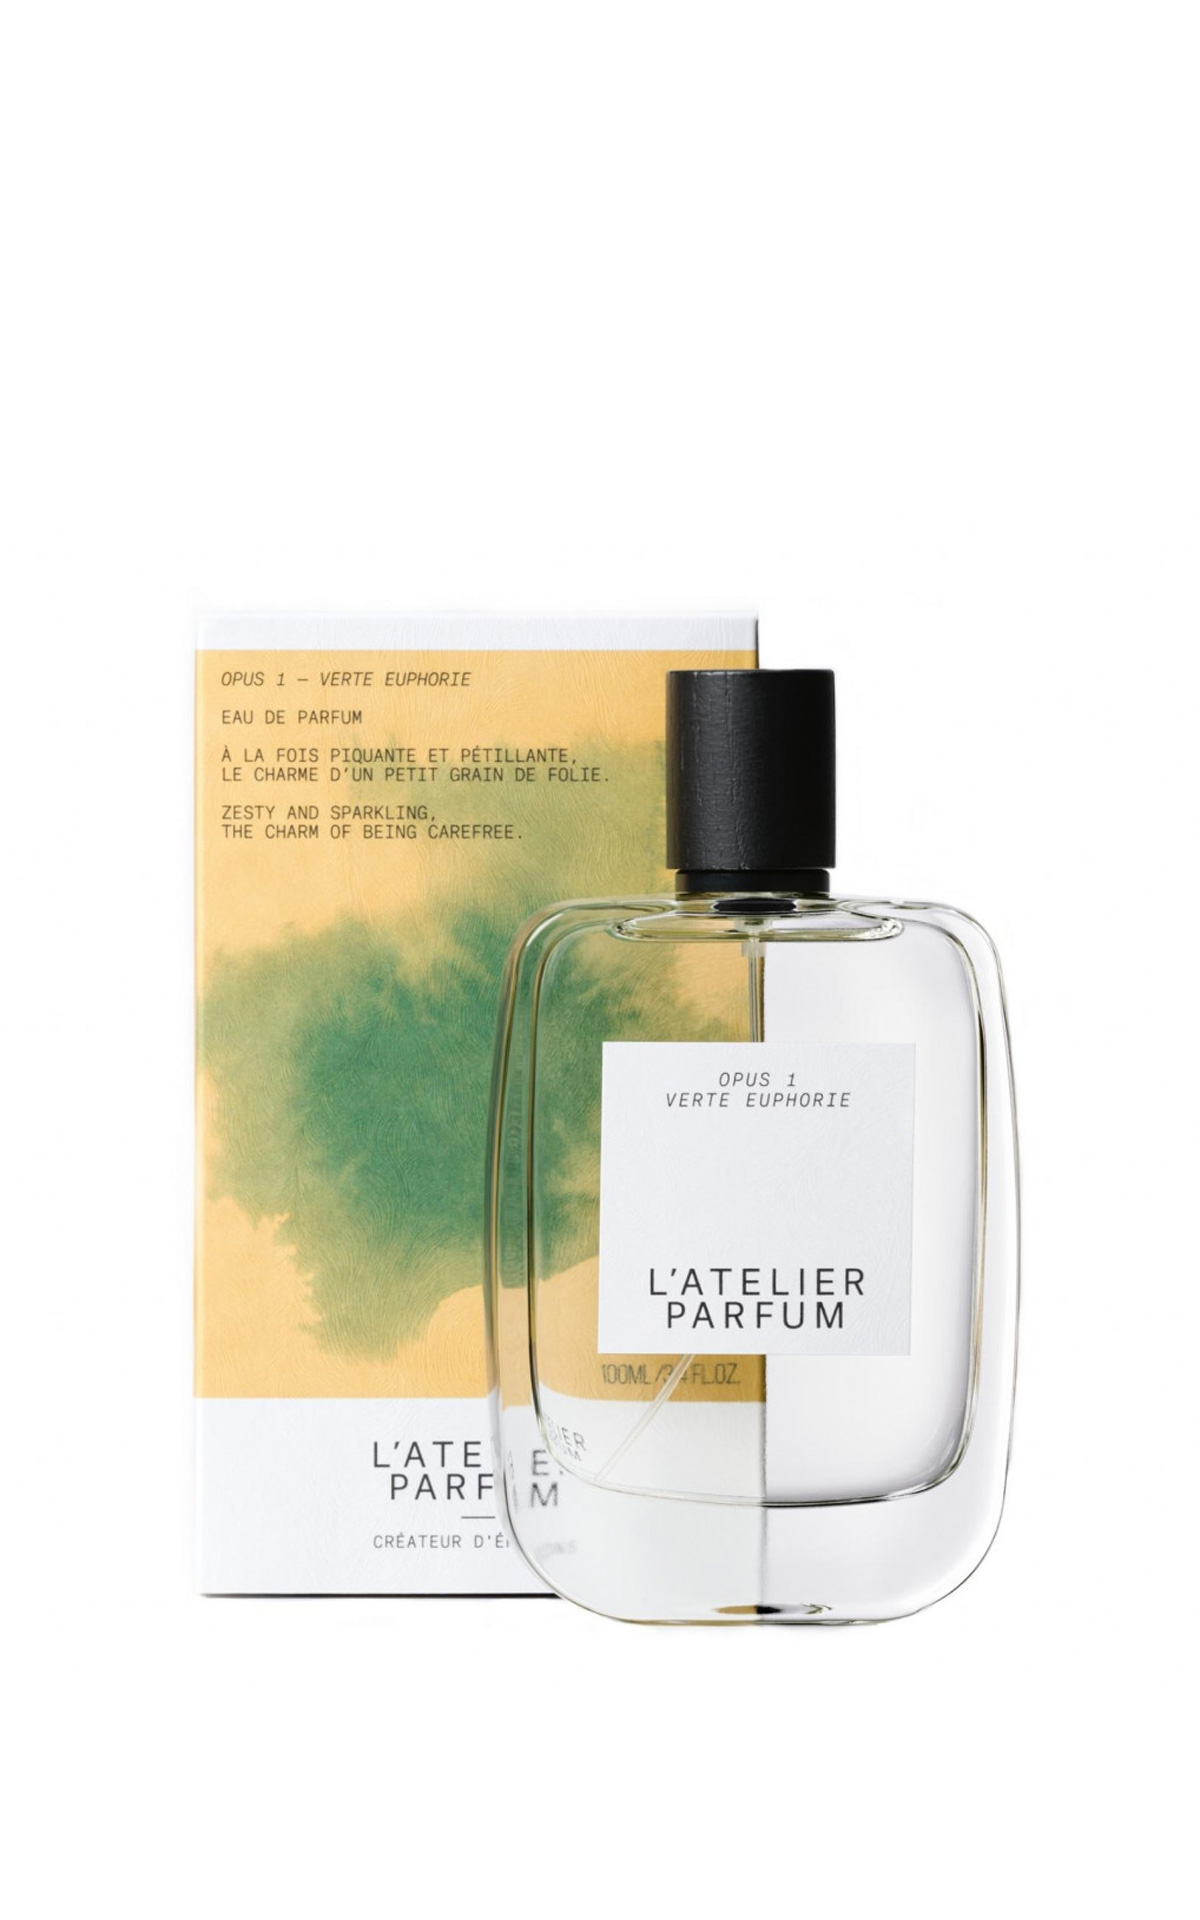 Atelier Parfum | Le jardin secret OPUS 1 